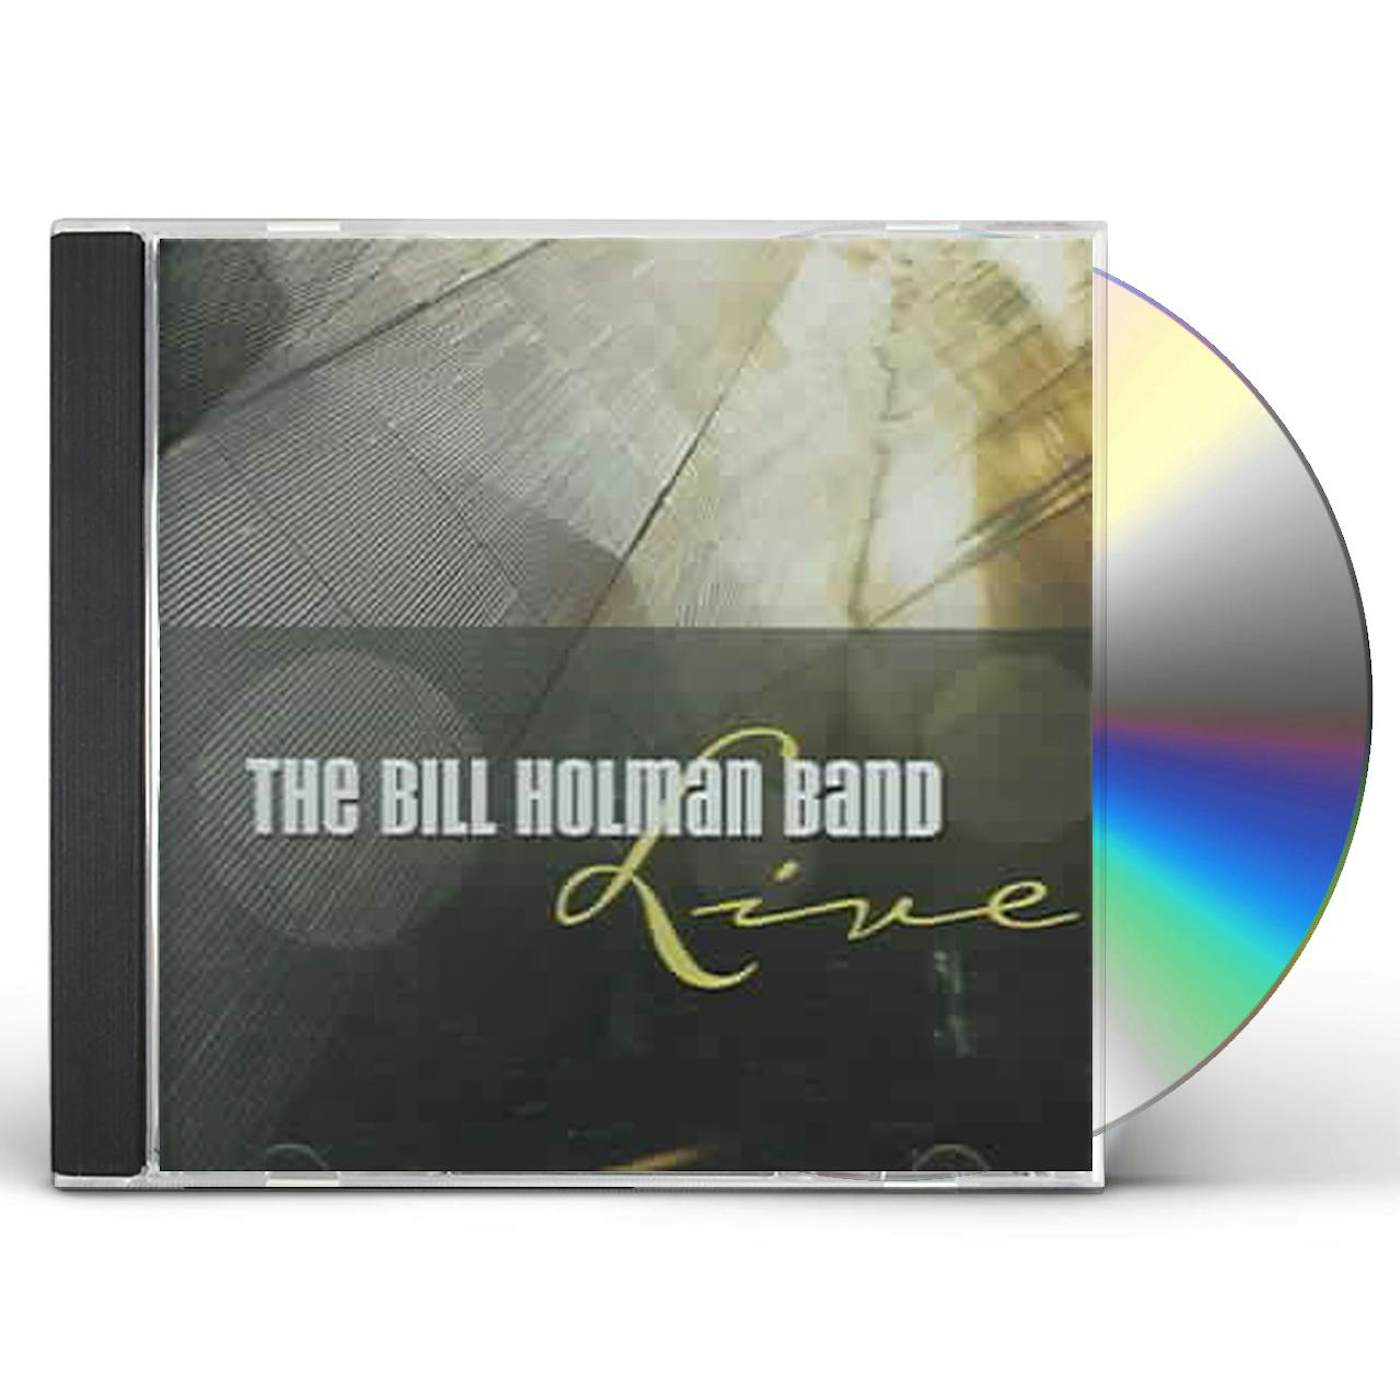 BILL HOLMAN BAND LIVE CD